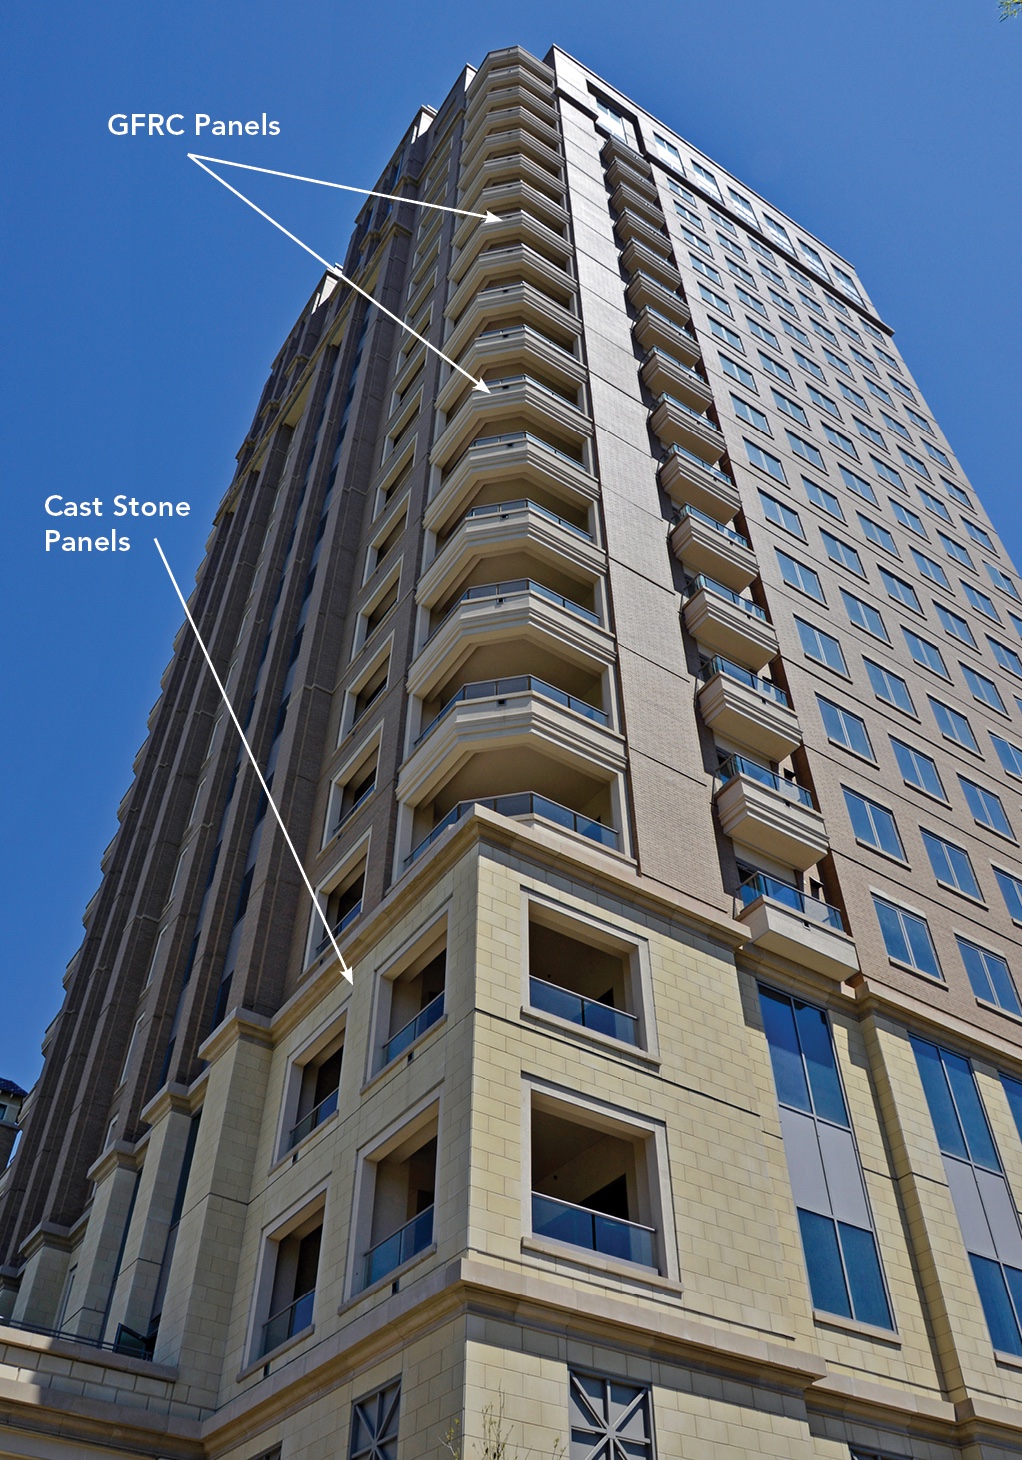 Stoneleigh Residential Tower - Cast Stone, GFRC Panels for Rain-screen, Cladding, Exterior Veneer Design